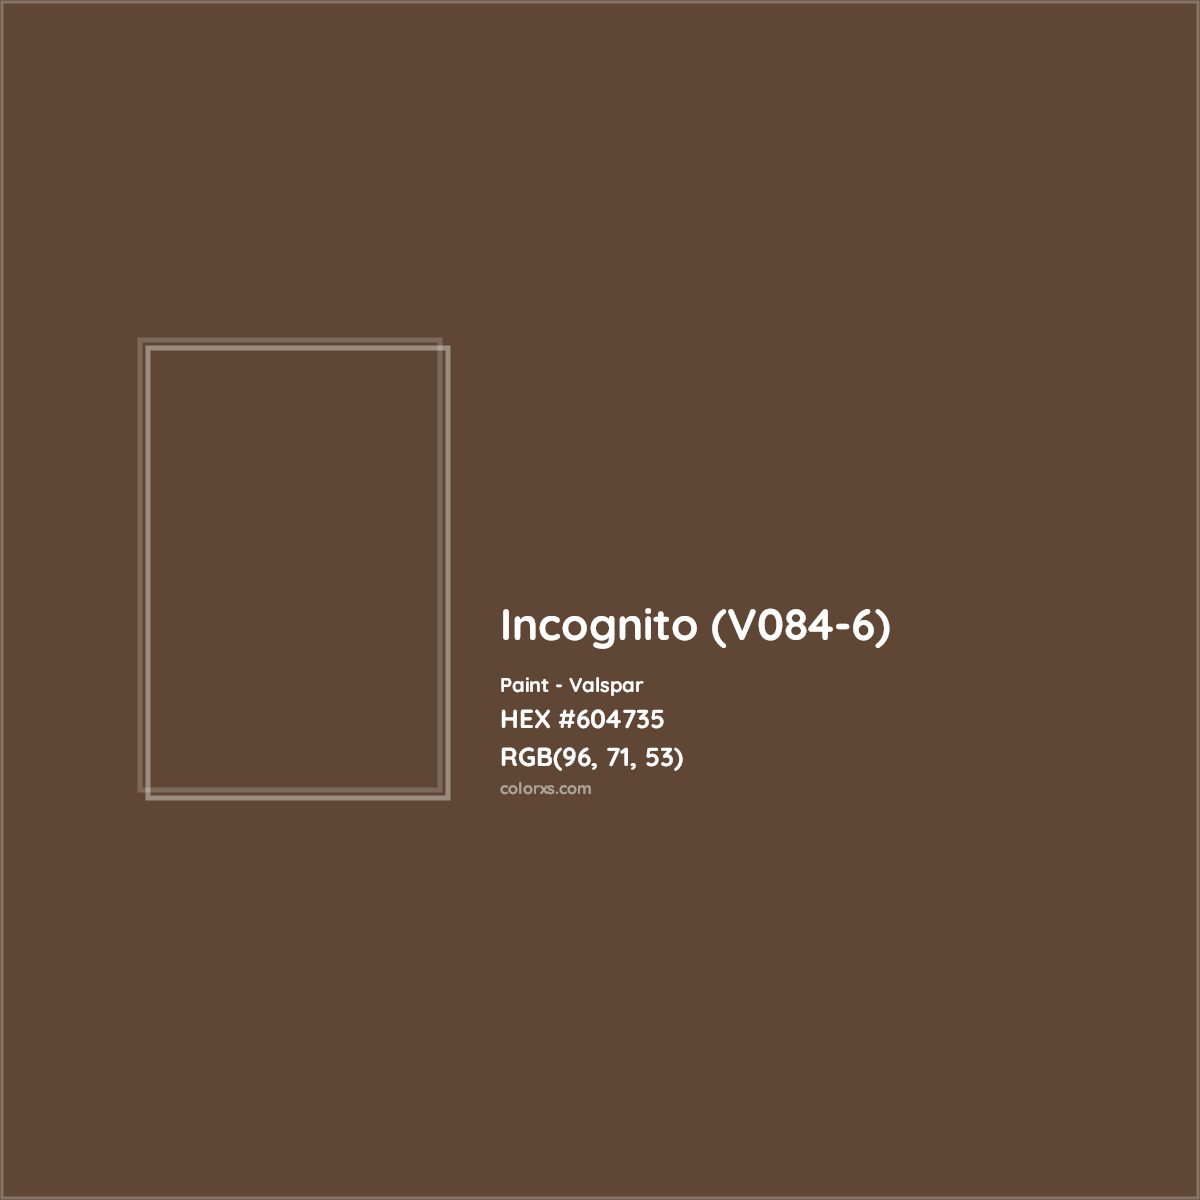 HEX #604735 Incognito (V084-6) Paint Valspar - Color Code